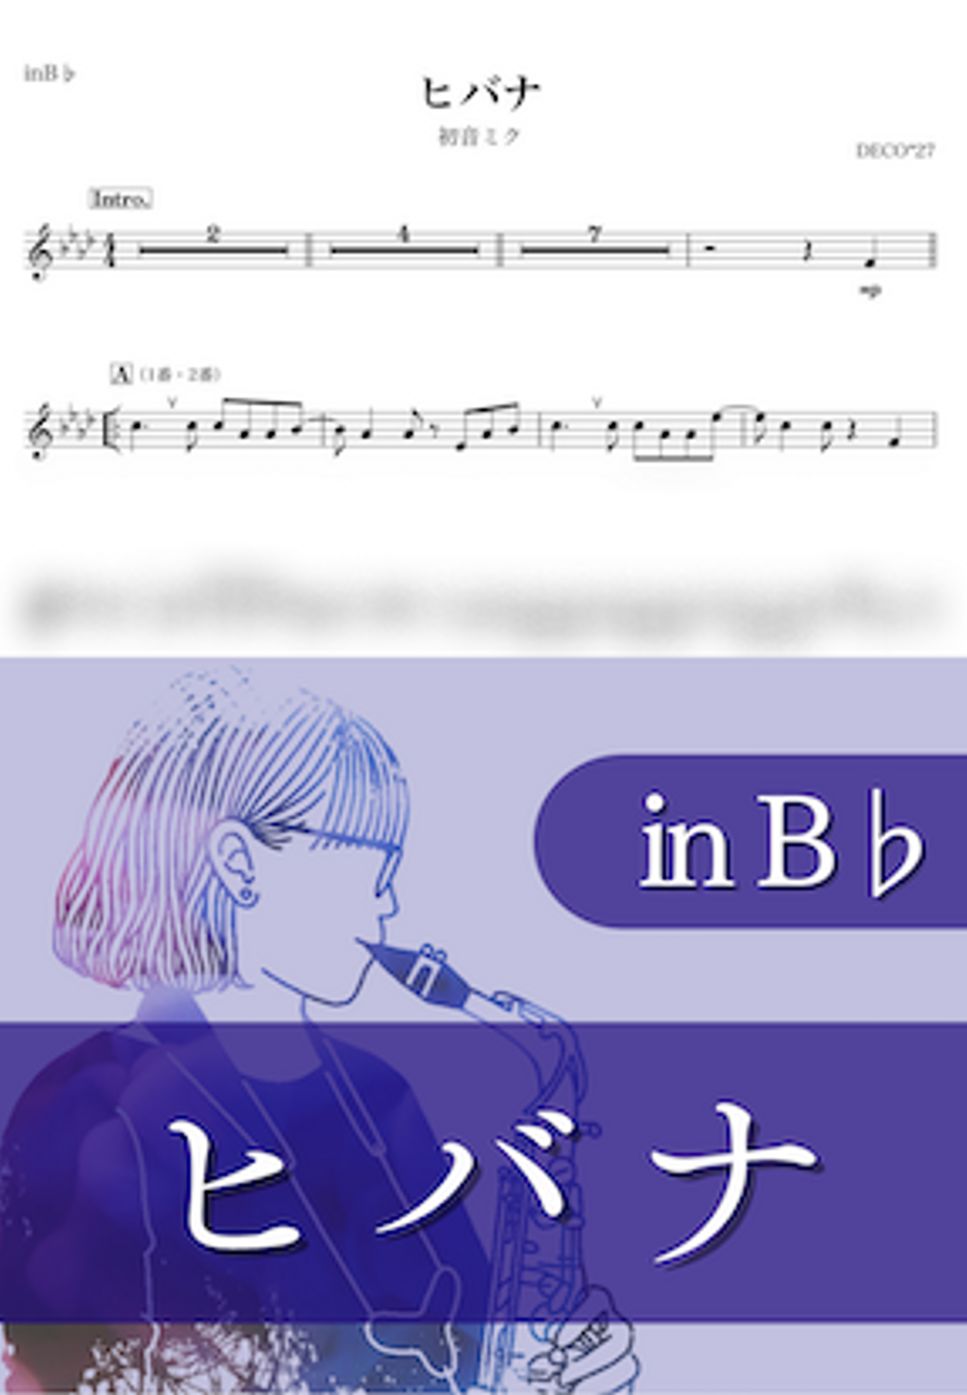 DECO*27 - ヒバナ (B♭) by kanamusic